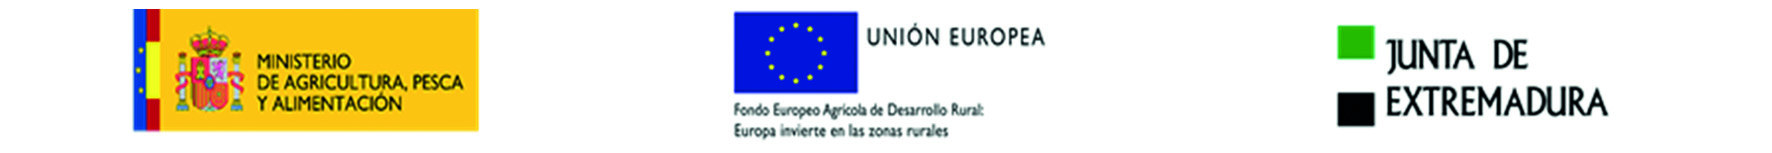 LOGO MINISTERIO DE AGRICULTURA, PESCA Y ALIMENTACION - UNION EUROPEA - JUNTA DE EXTREMADURA